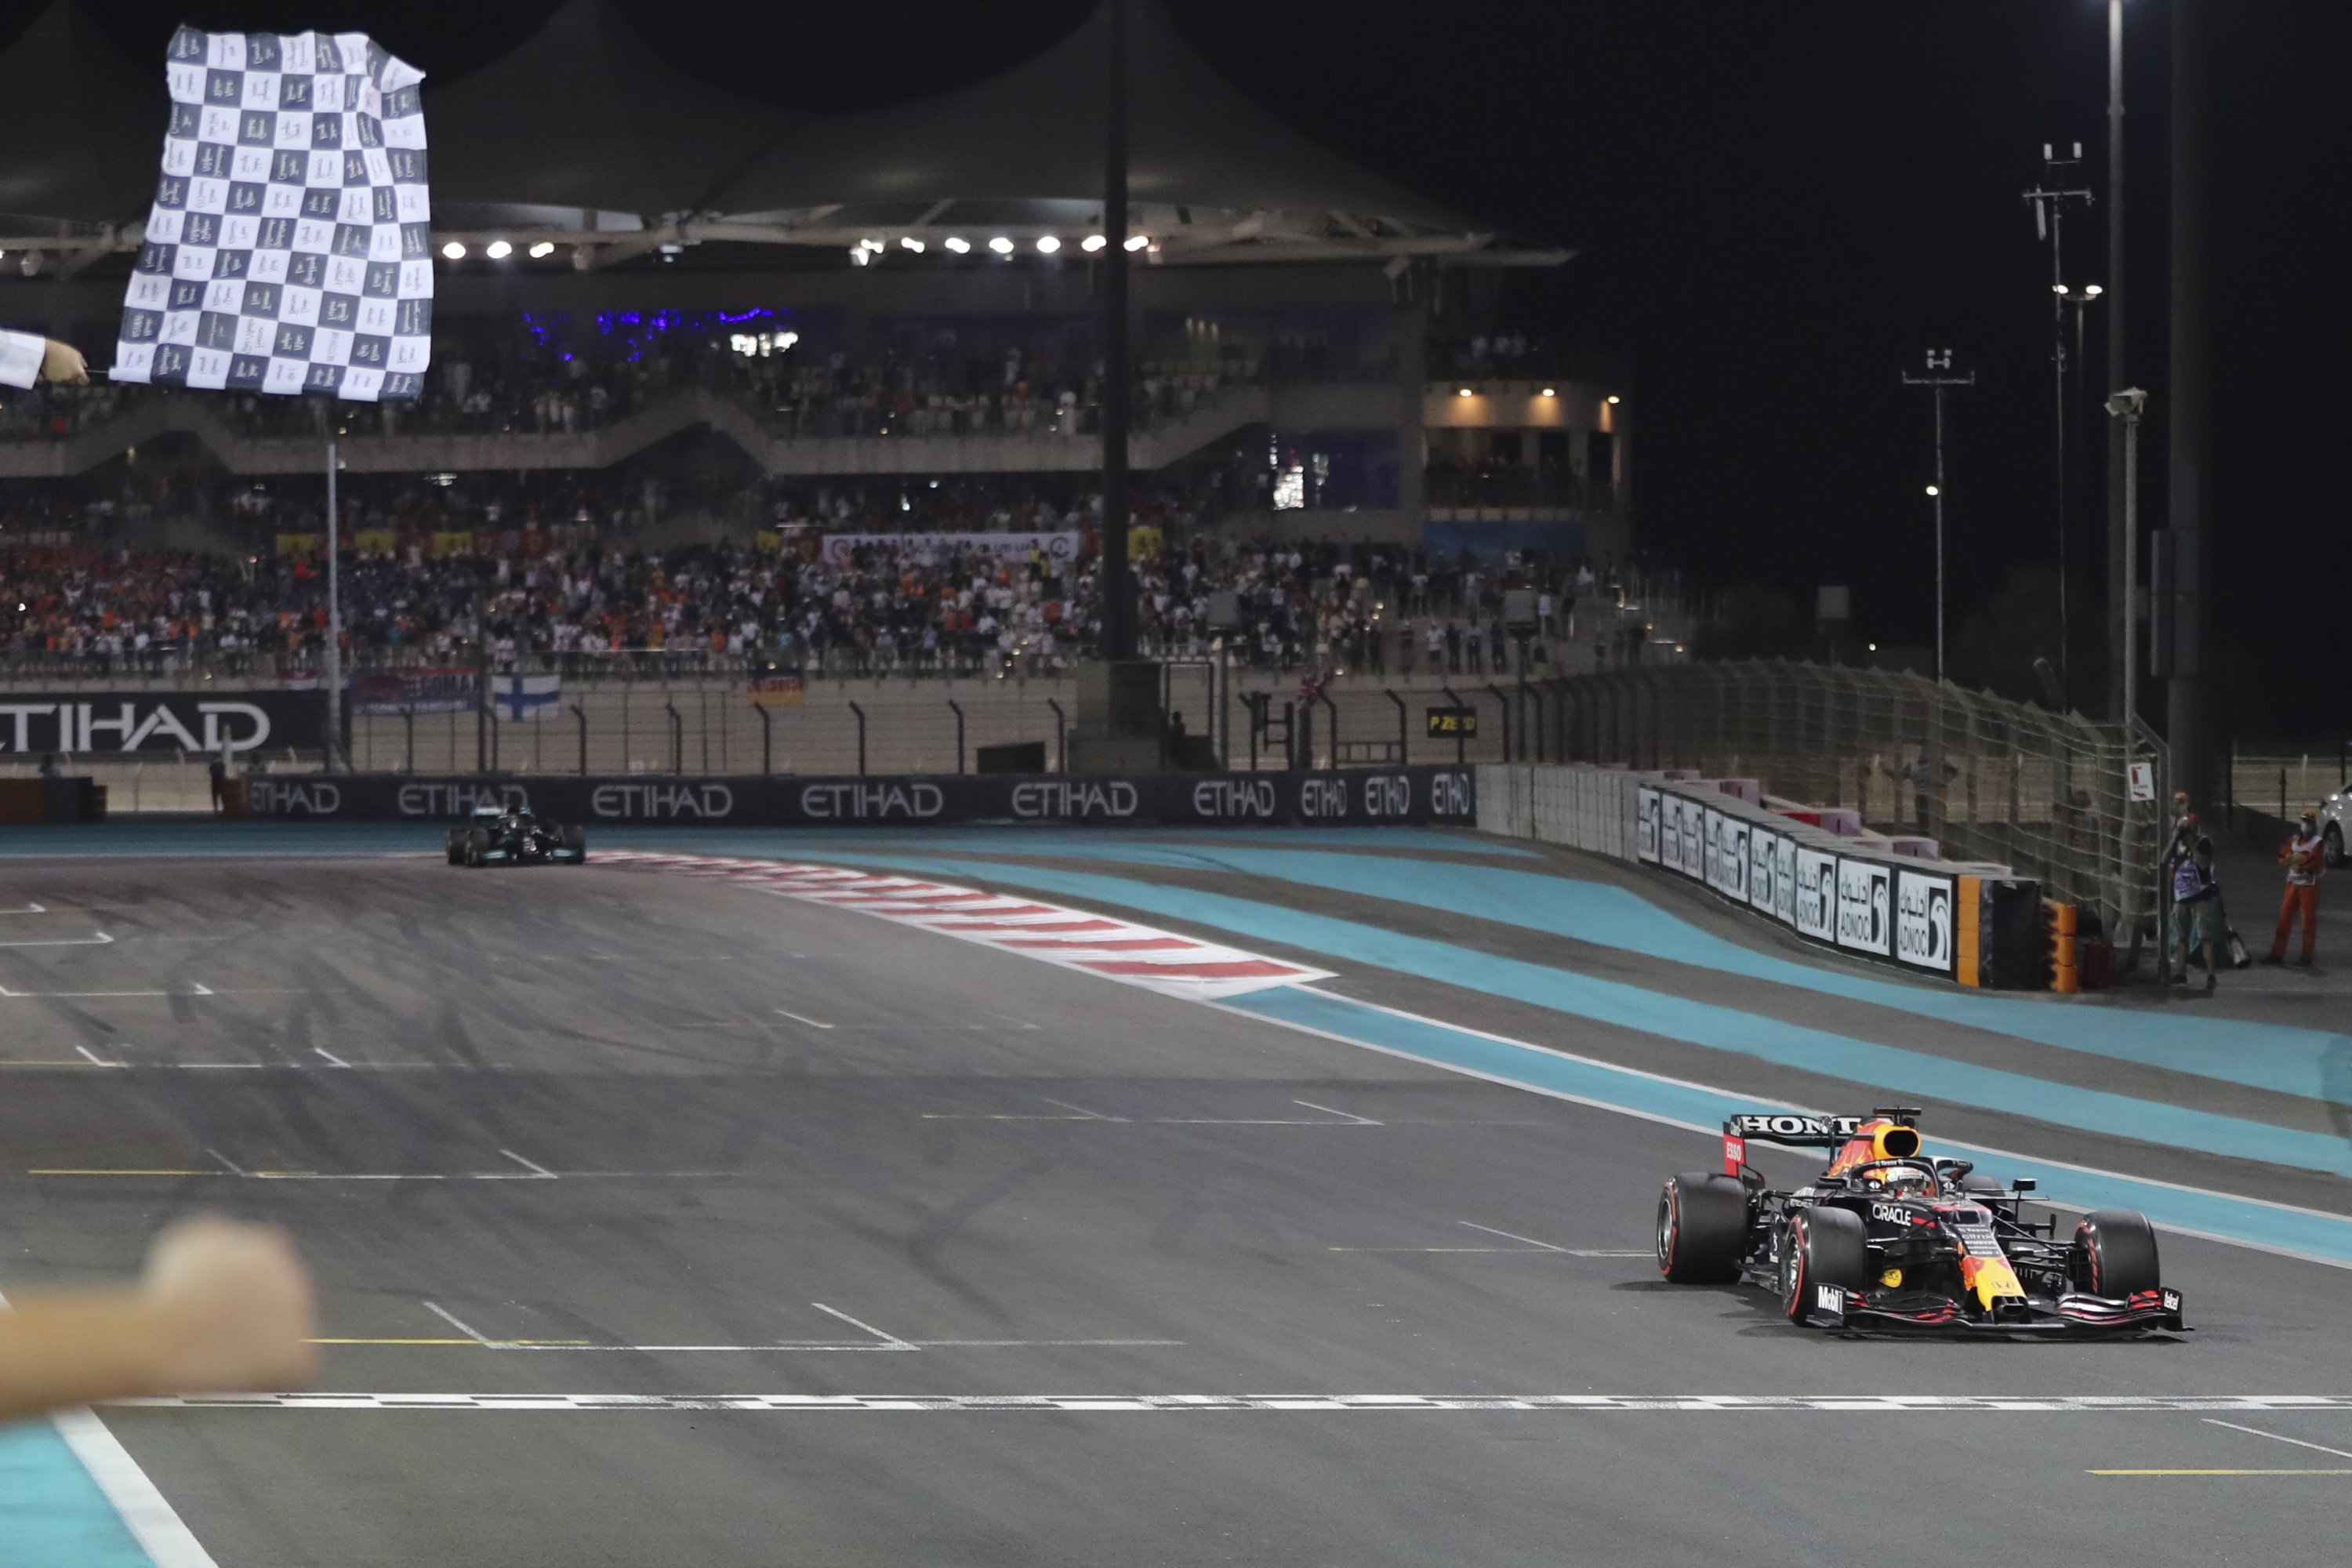 Red Bull's Dutch driver Max Verstappen (R) crosses the finish line to win the 2021 Abu Dhabi Grand Prix and the F1 world championship at Yas Marina Circuit, Abu Dhabi, UAE, Dec. 12, 2021. (EPA Photo)